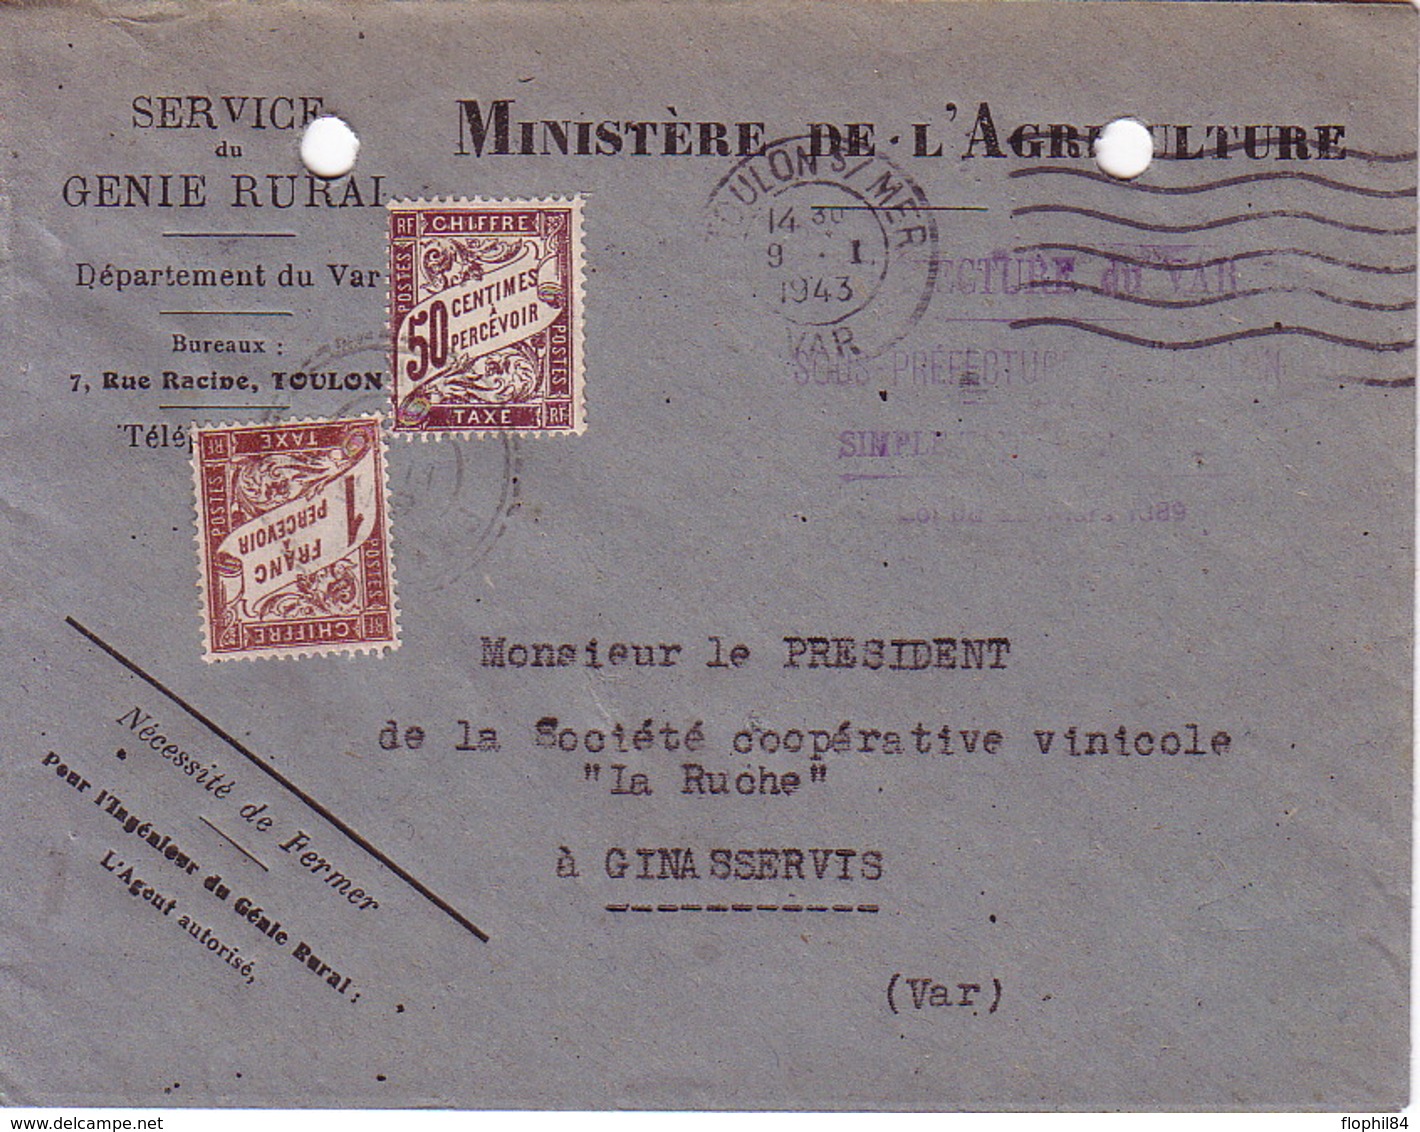 VAR - TOULON - MINISTERE DE L'AGRICULTURE - SIMPLE TAXE - 1F50 - A GINASSERVIS - VAR - 9-1-1943. - 1859-1959 Briefe & Dokumente